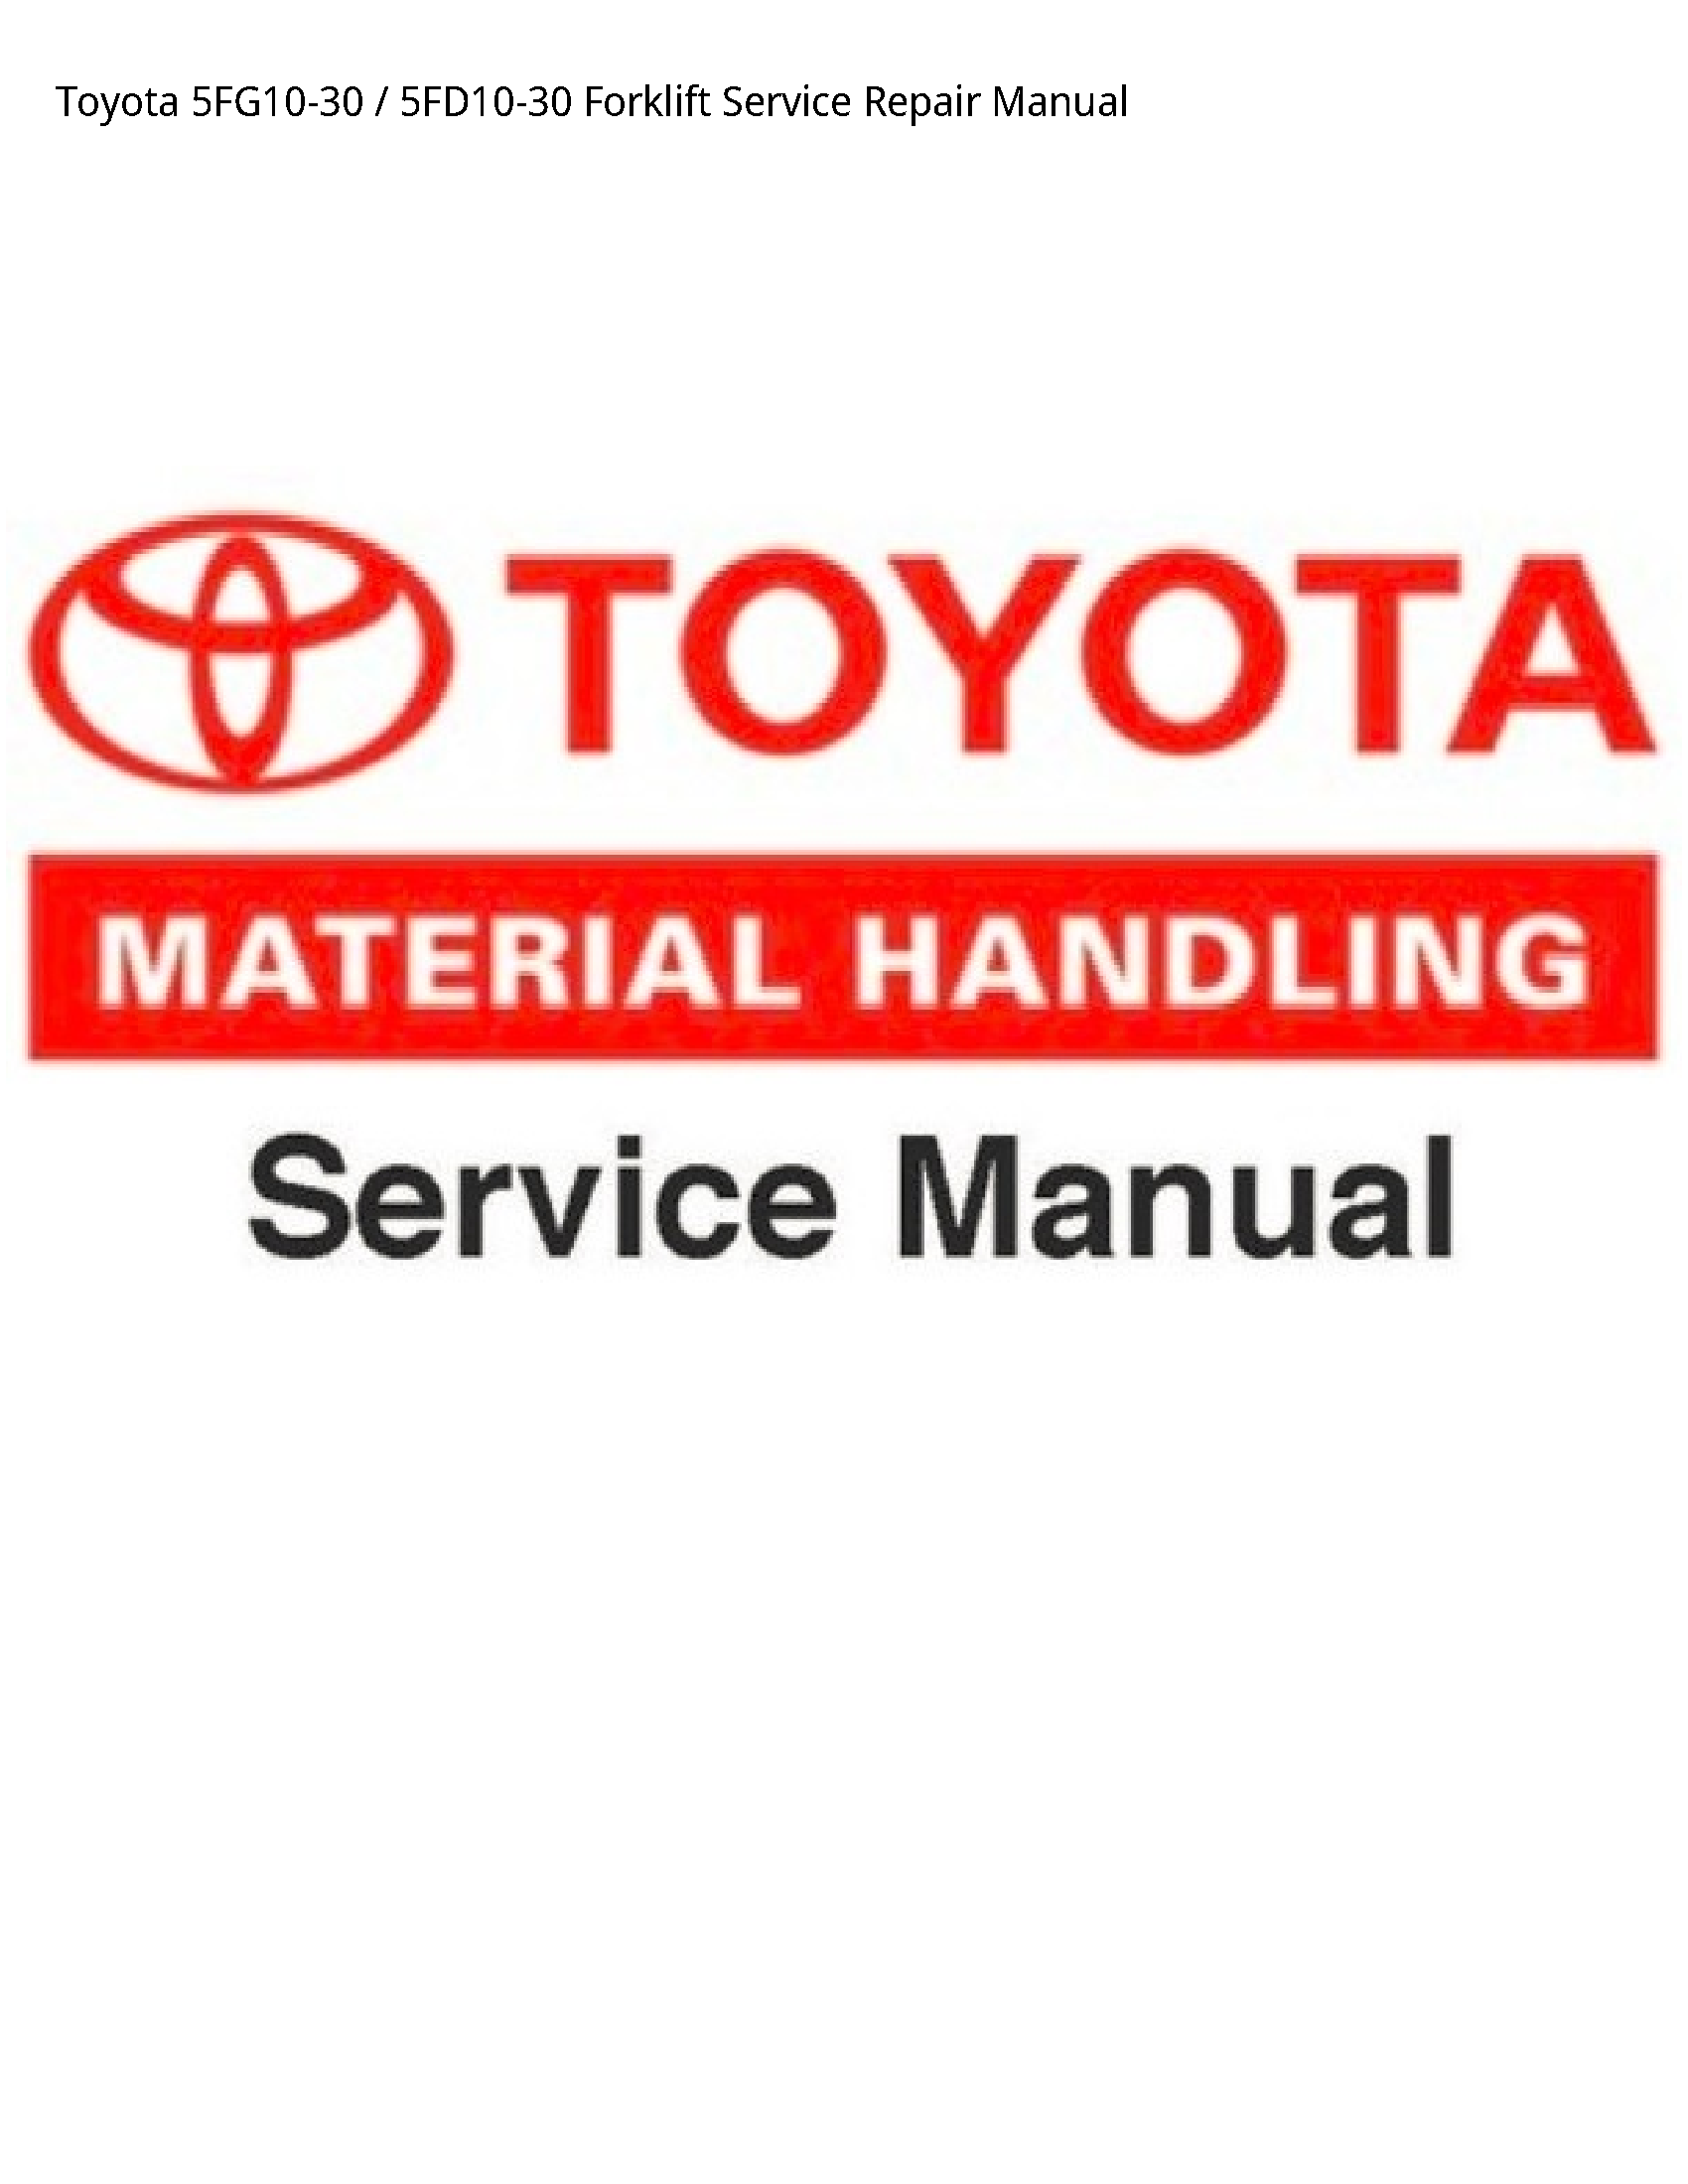 Toyota 5FG10-30 Forklift manual